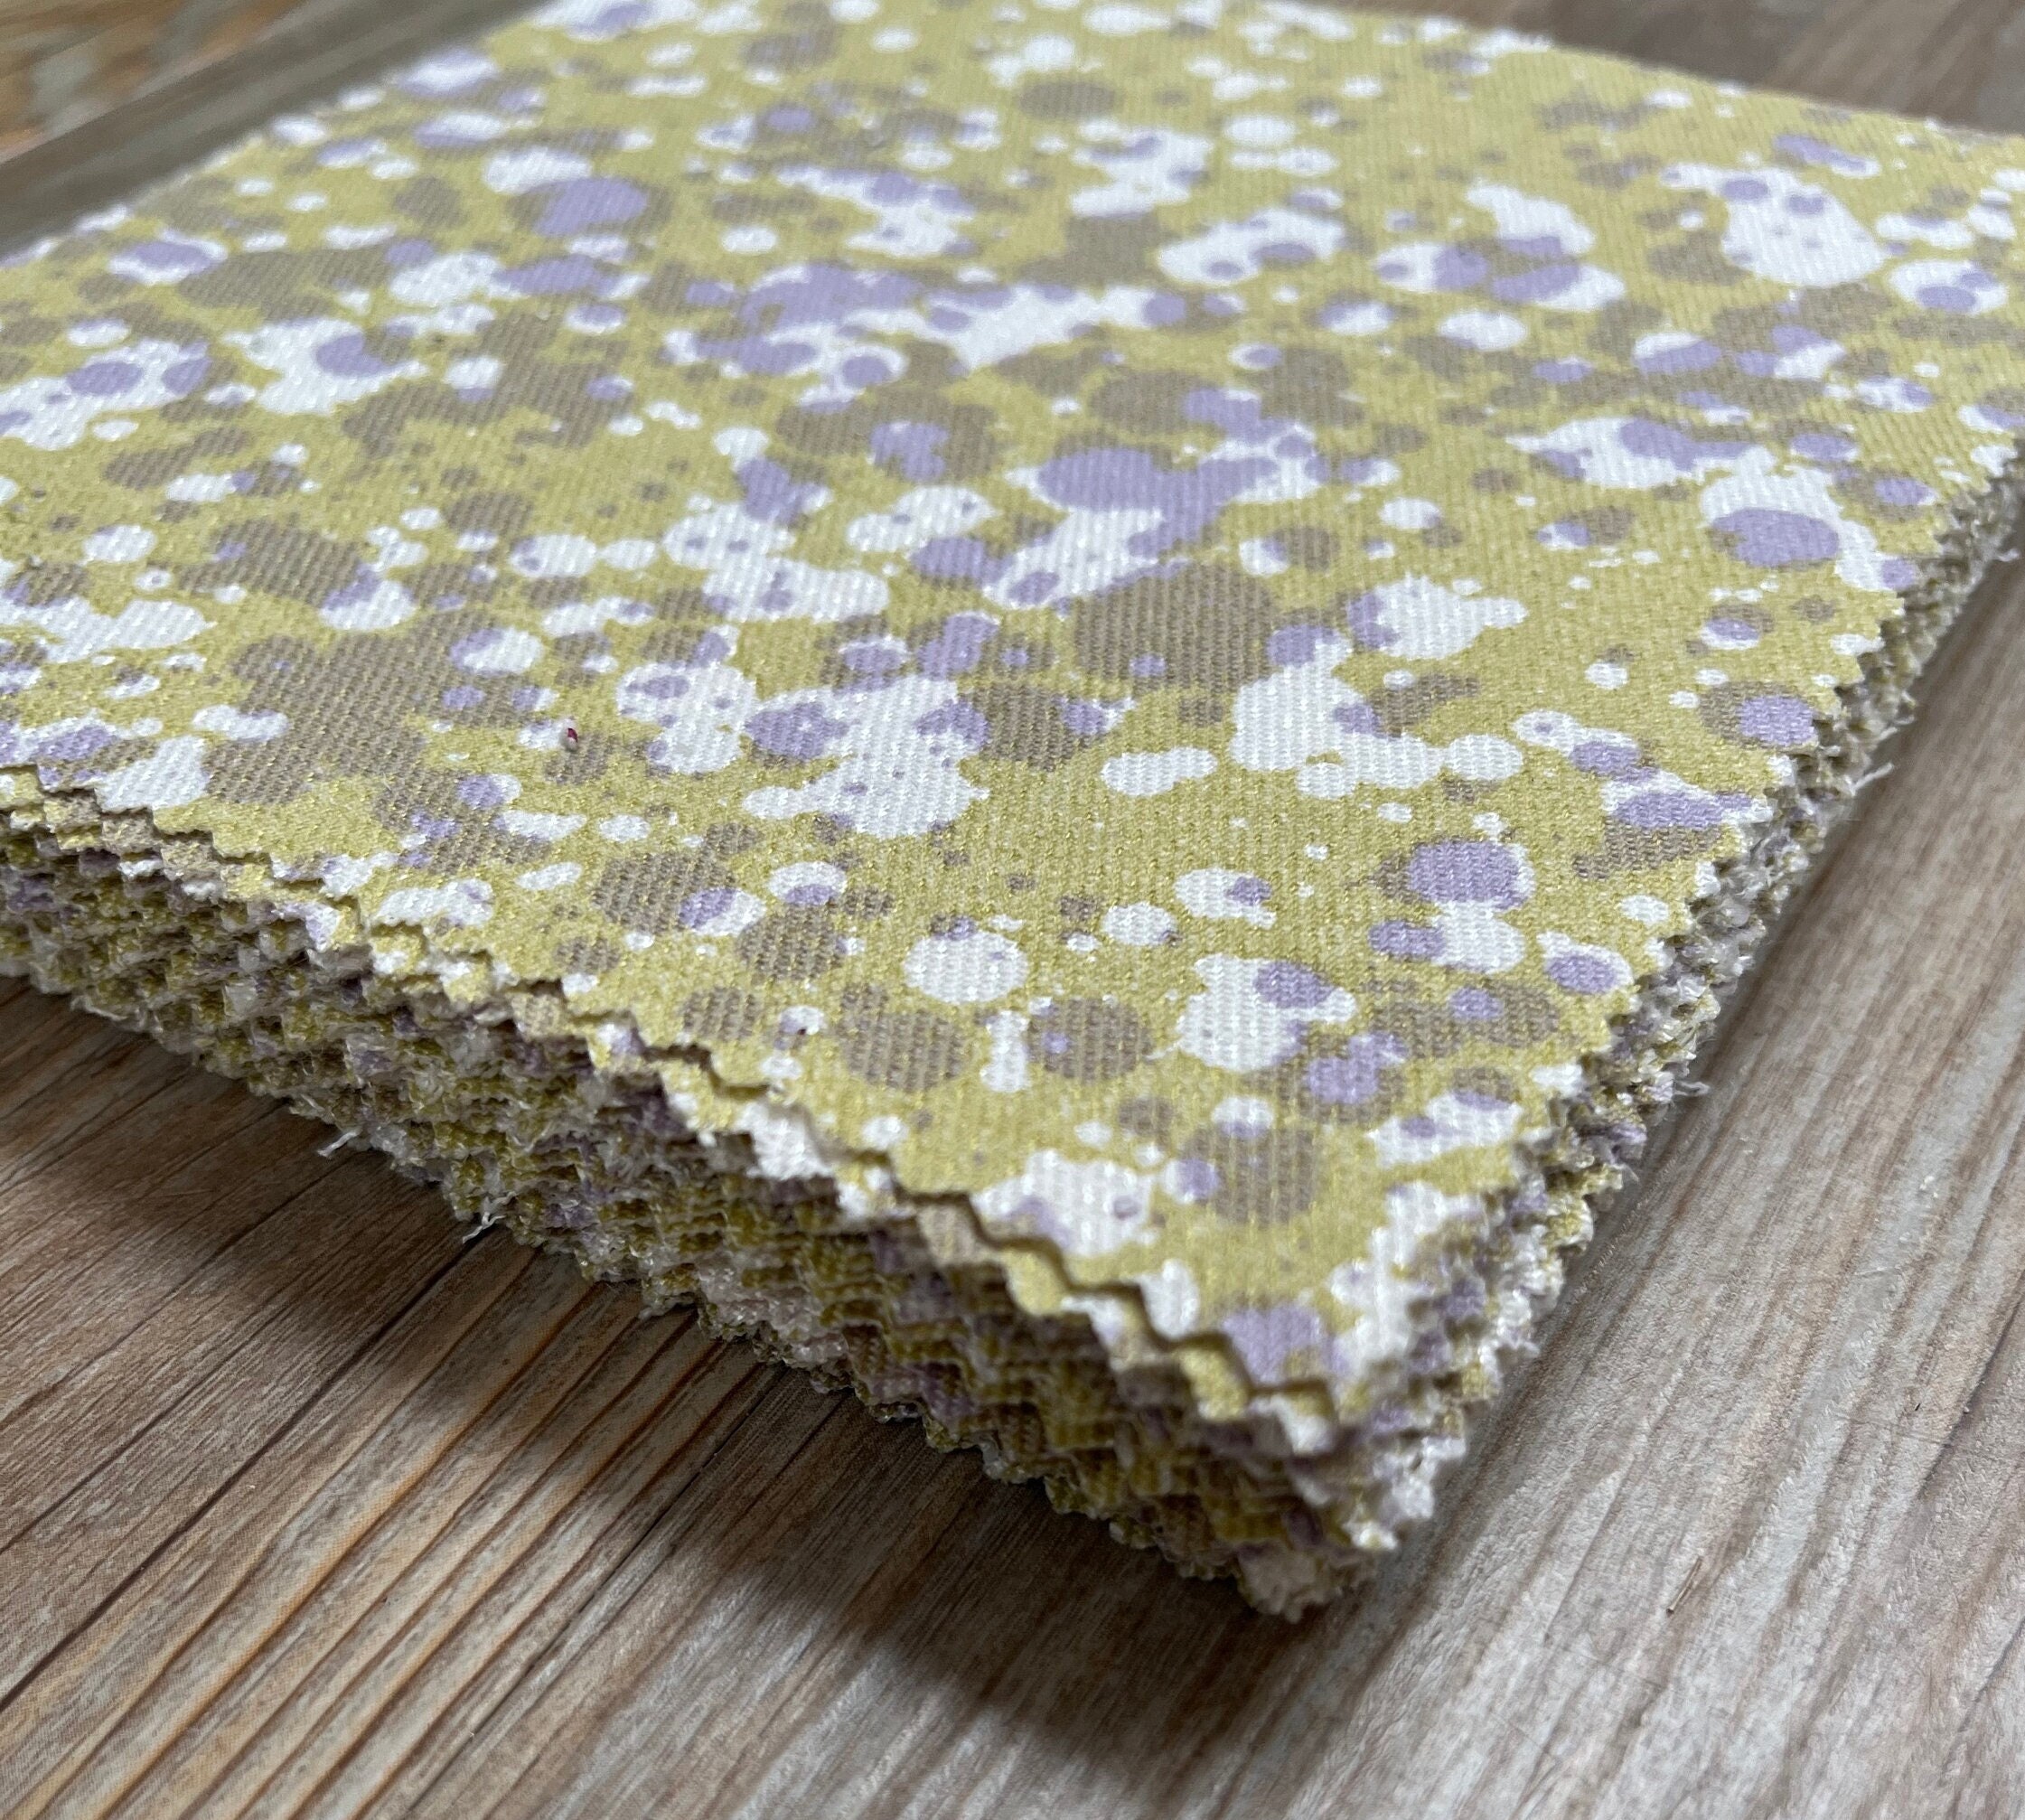 10 x 12 inch fabric squares